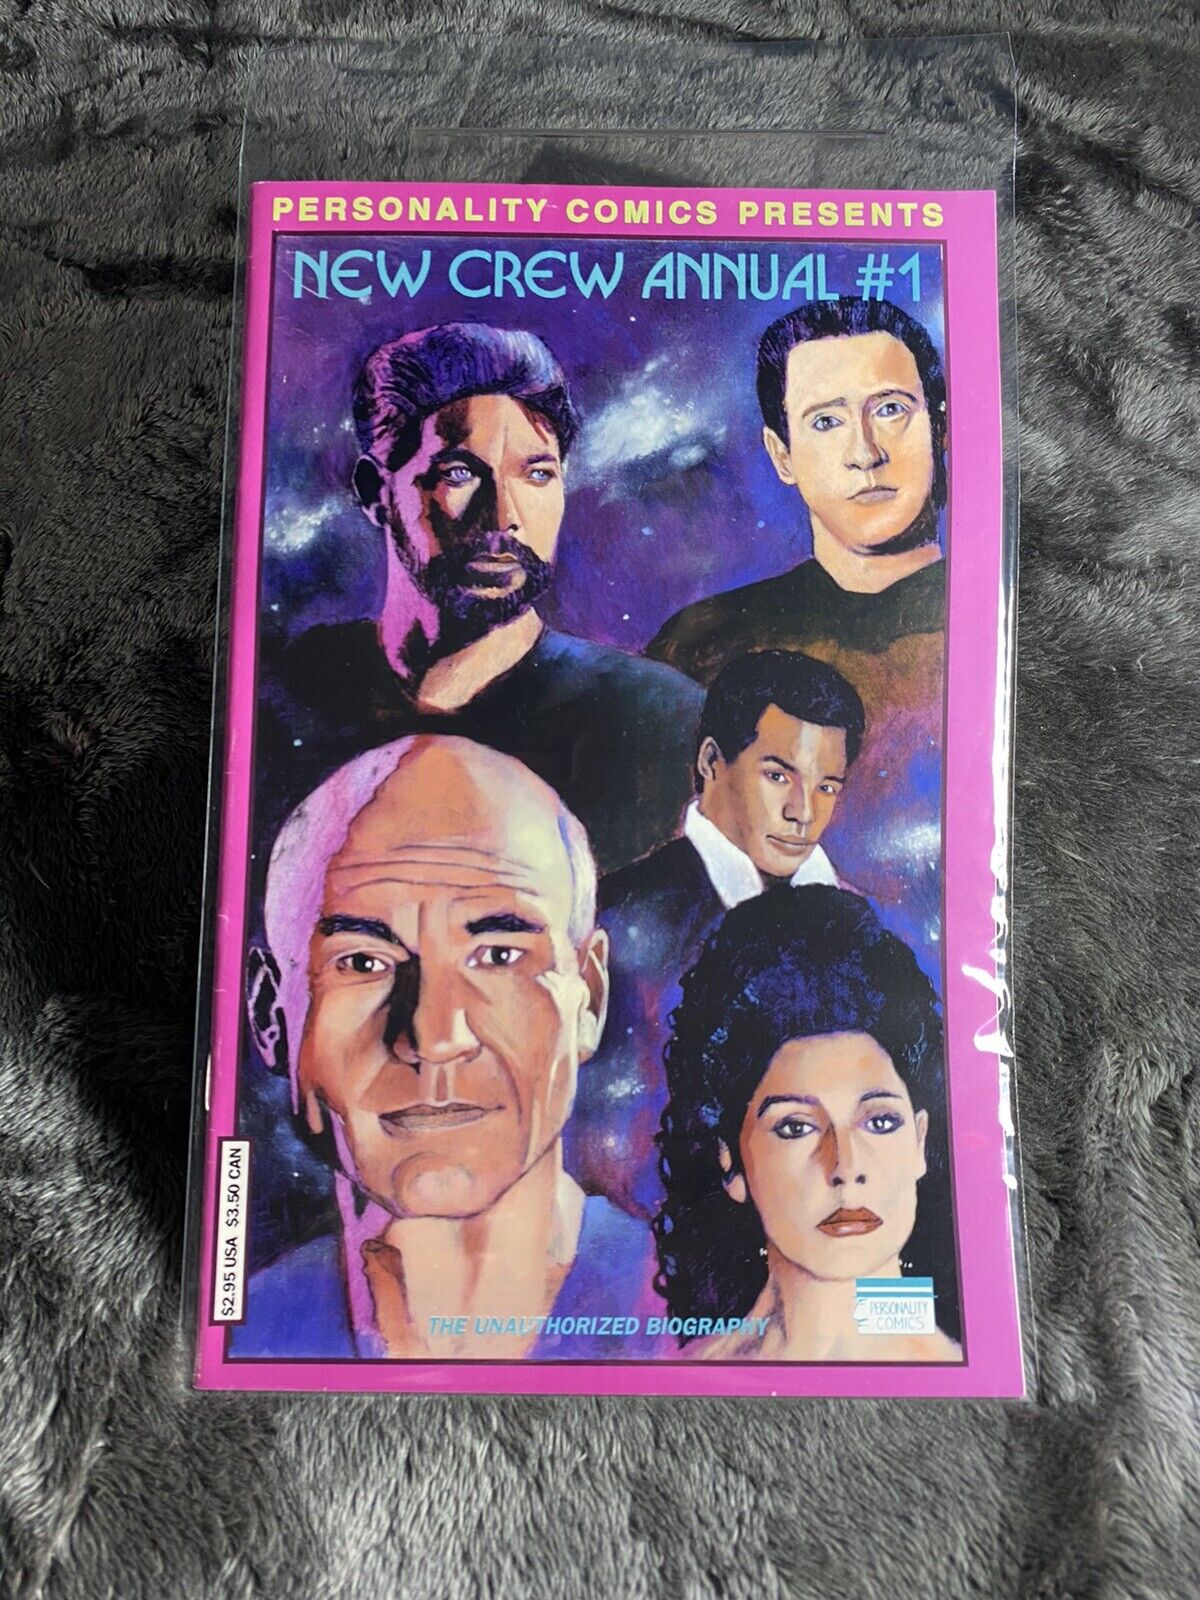 New Crew Annual #1 (Personality Comics Dec 1992)